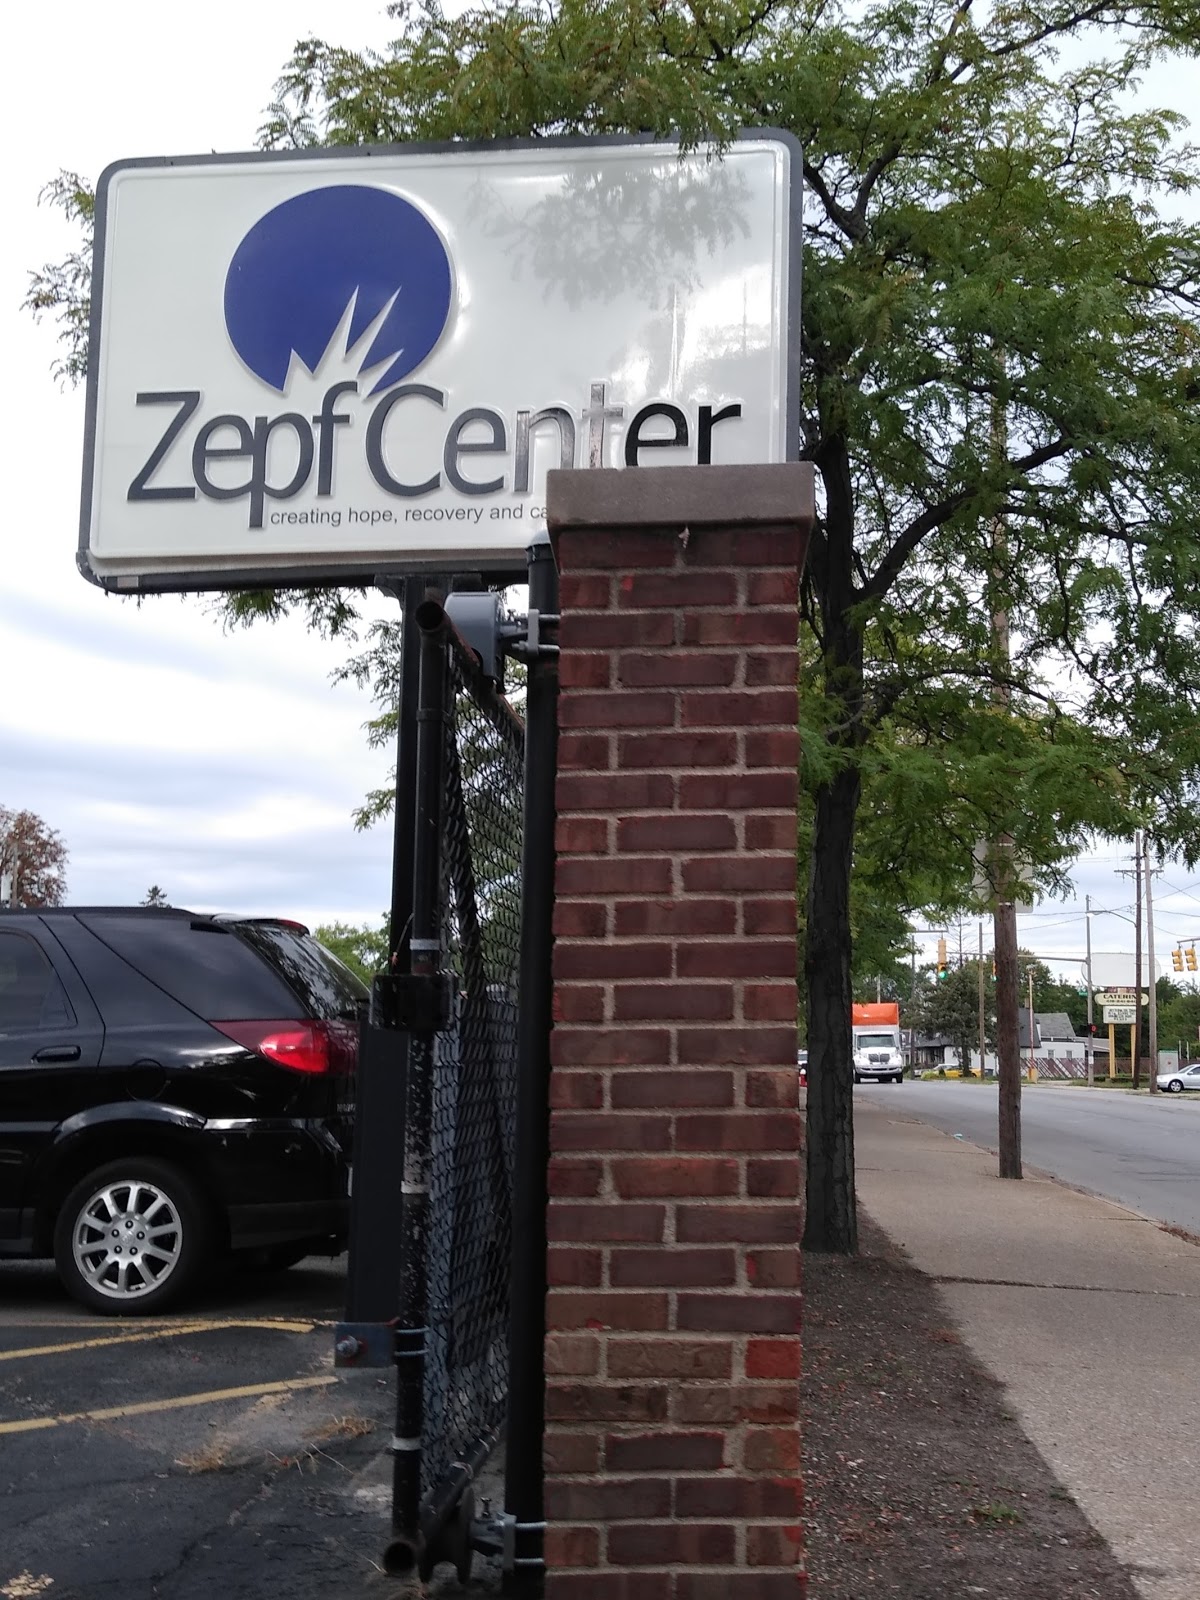 Zepf Center - Hawley